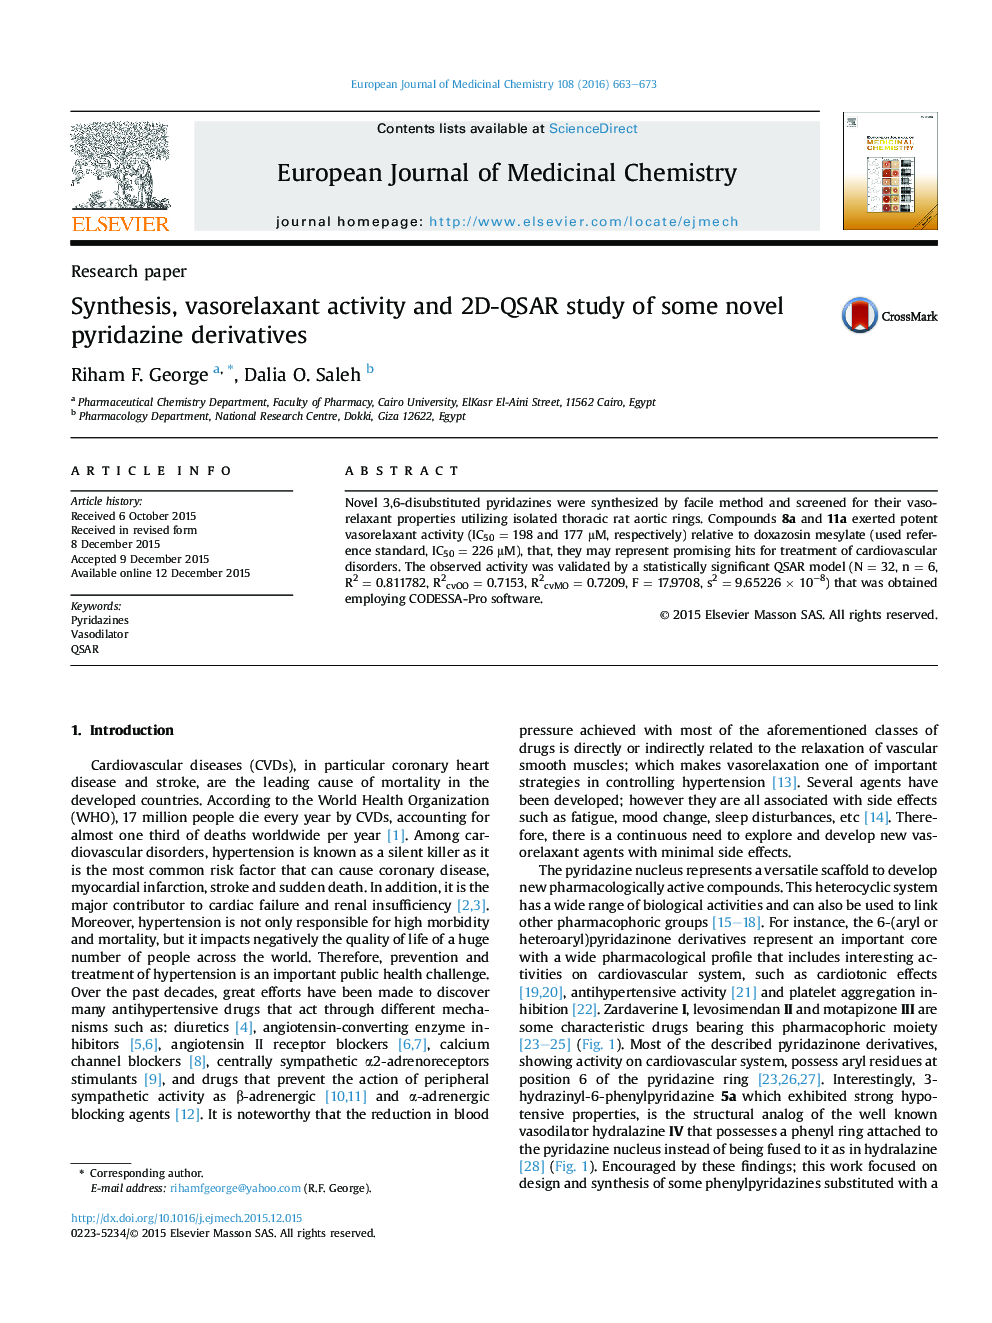 Synthesis, vasorelaxant activity and 2D-QSAR study of some novel pyridazine derivatives